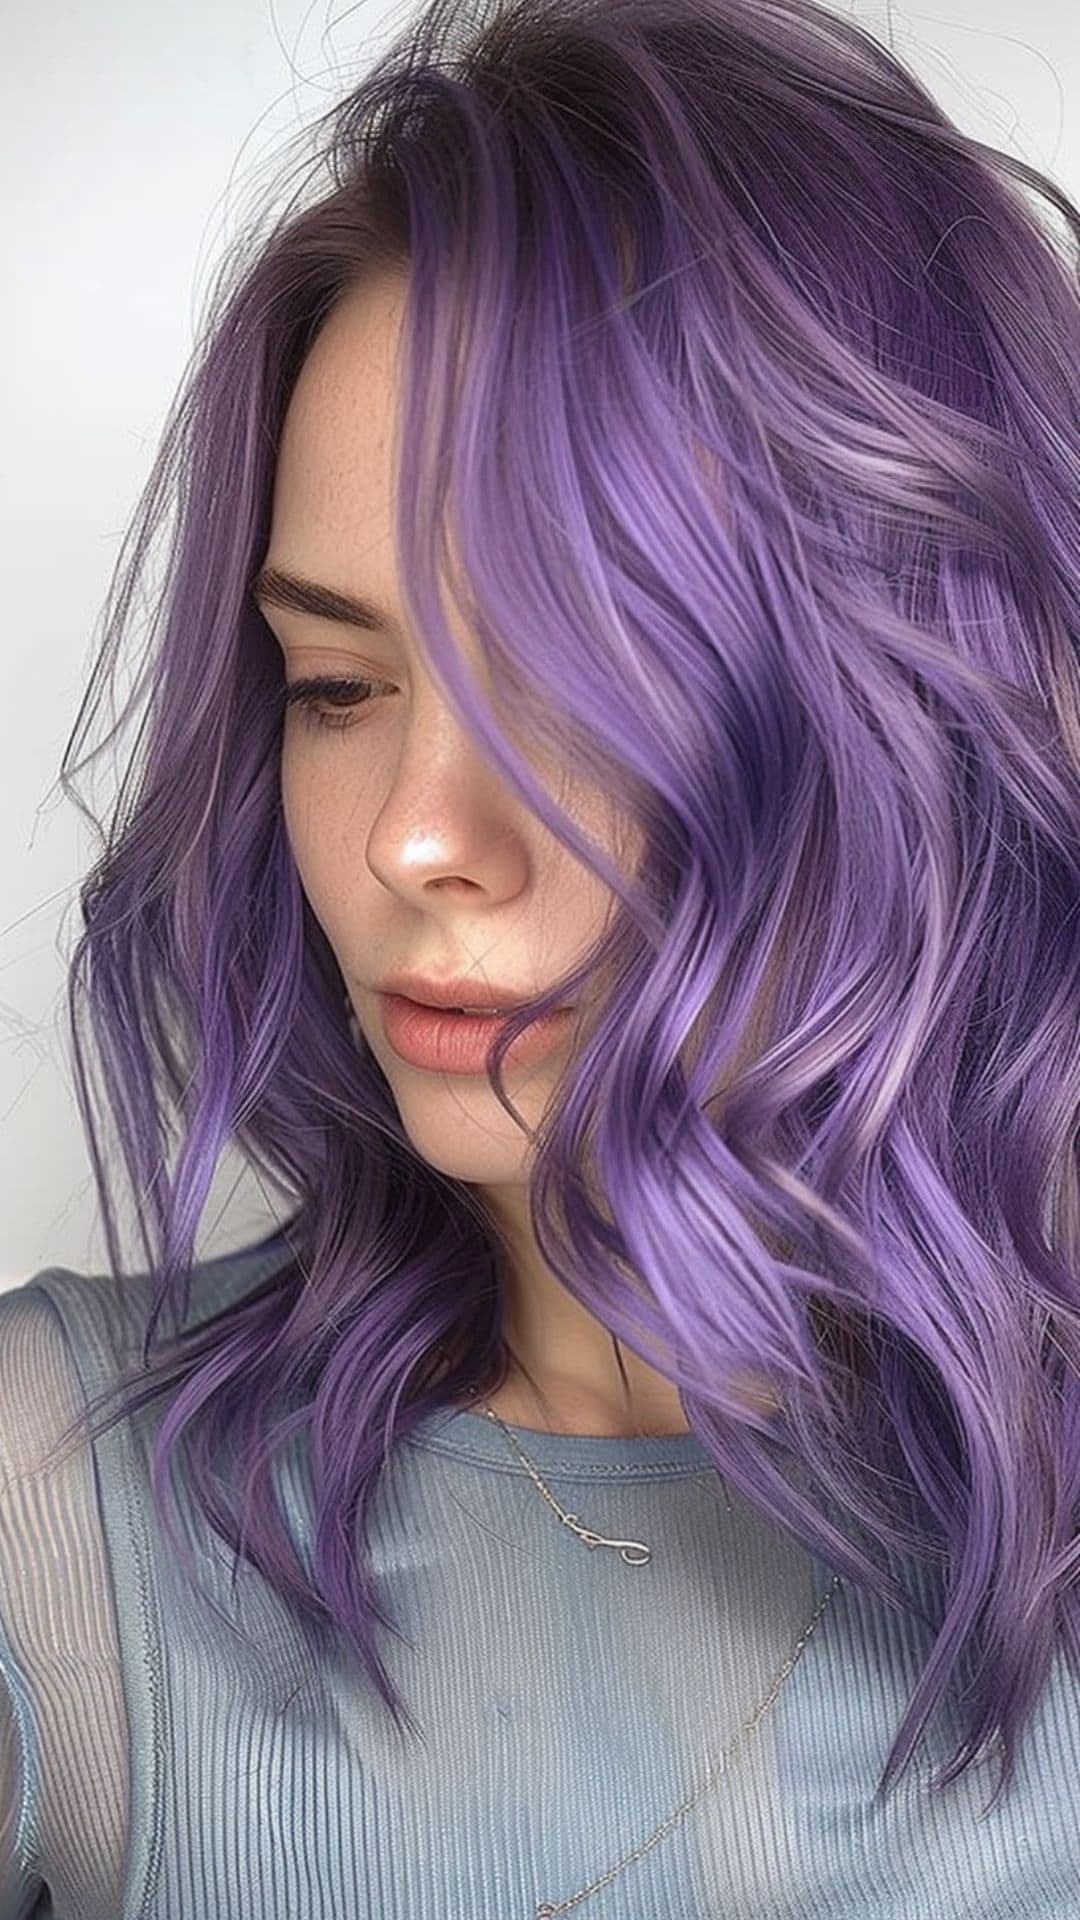 A woman modelling a lavender macaron hair color.